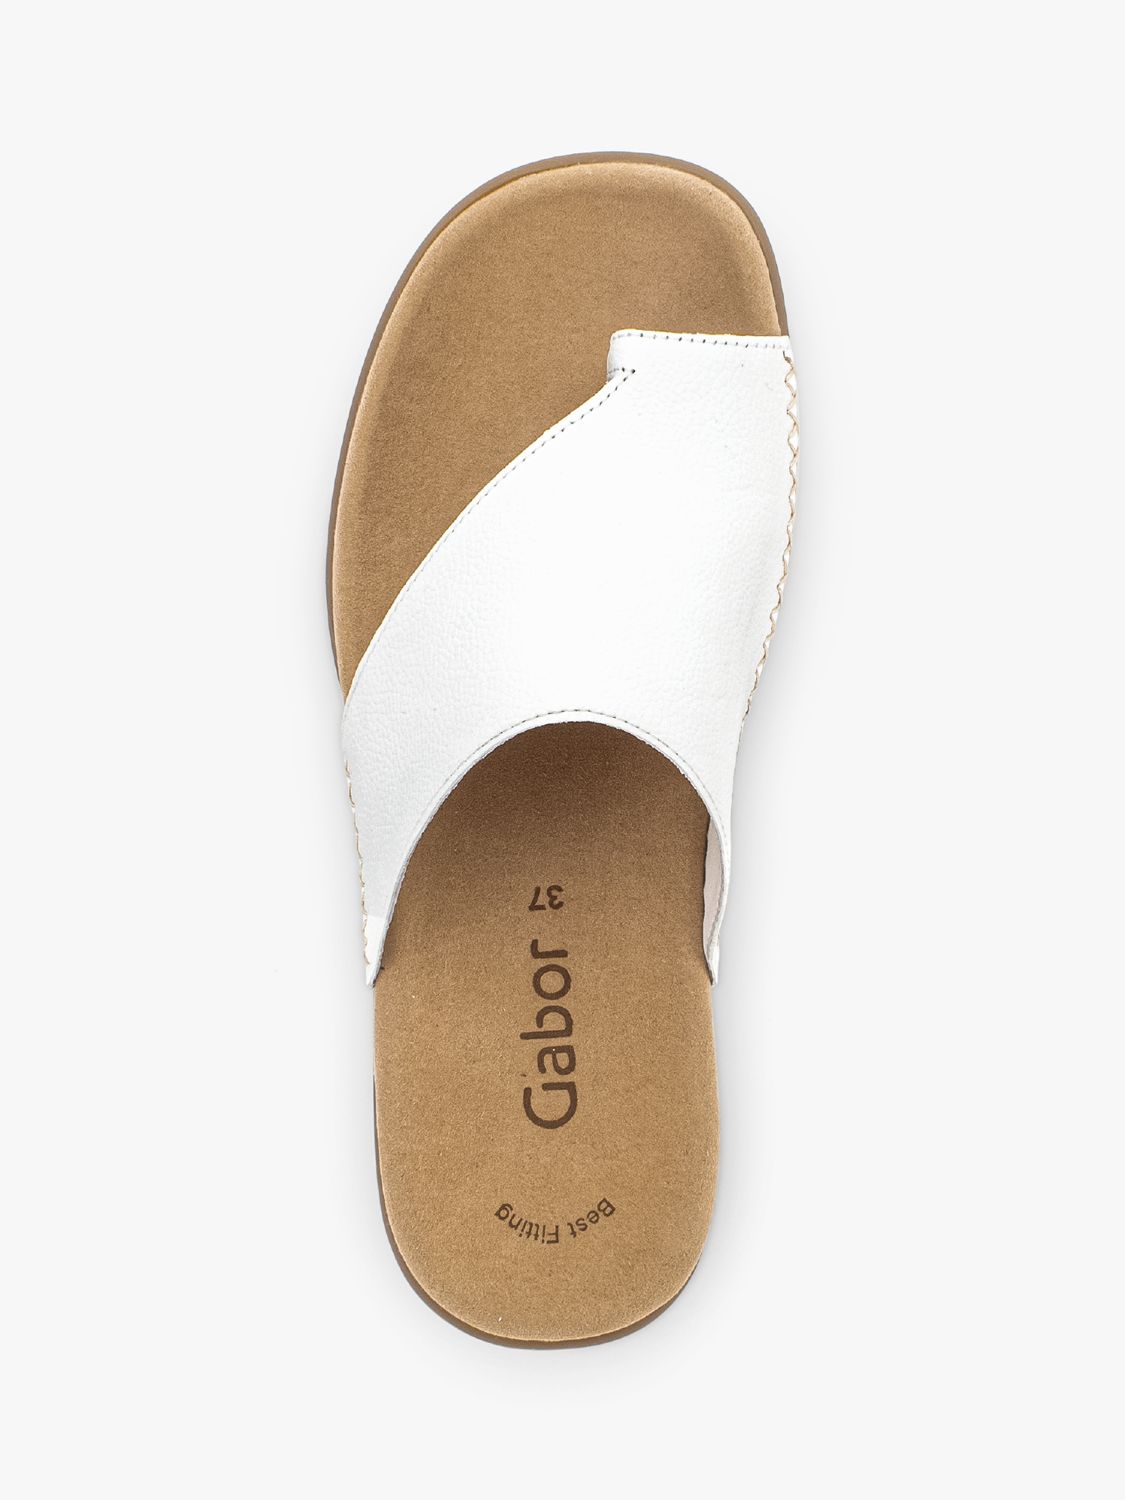 Buy Gabor Lanzarote Toe Loop Leather Sandals, White Online at johnlewis.com